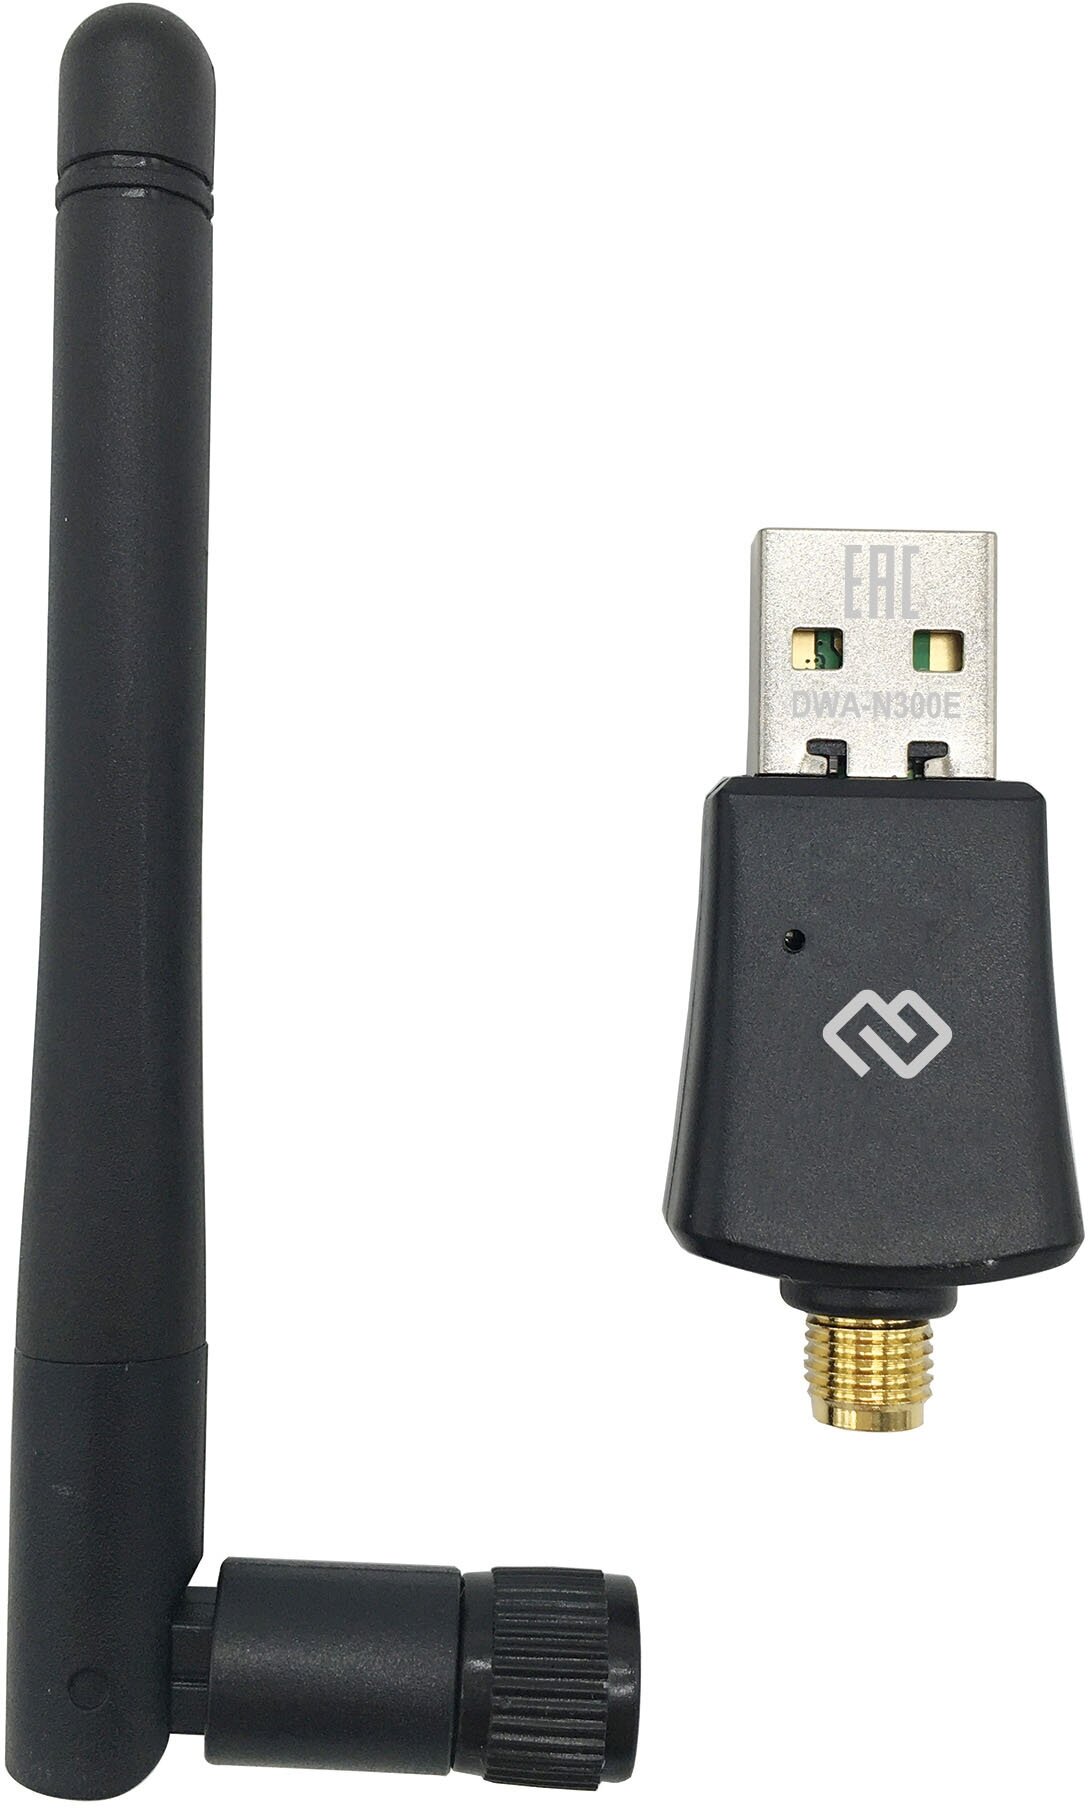 Сетевой адаптер WiFi Digma DWA-N300E N300 USB 2.0 ант. внеш. съем 1ант. упак.1шт